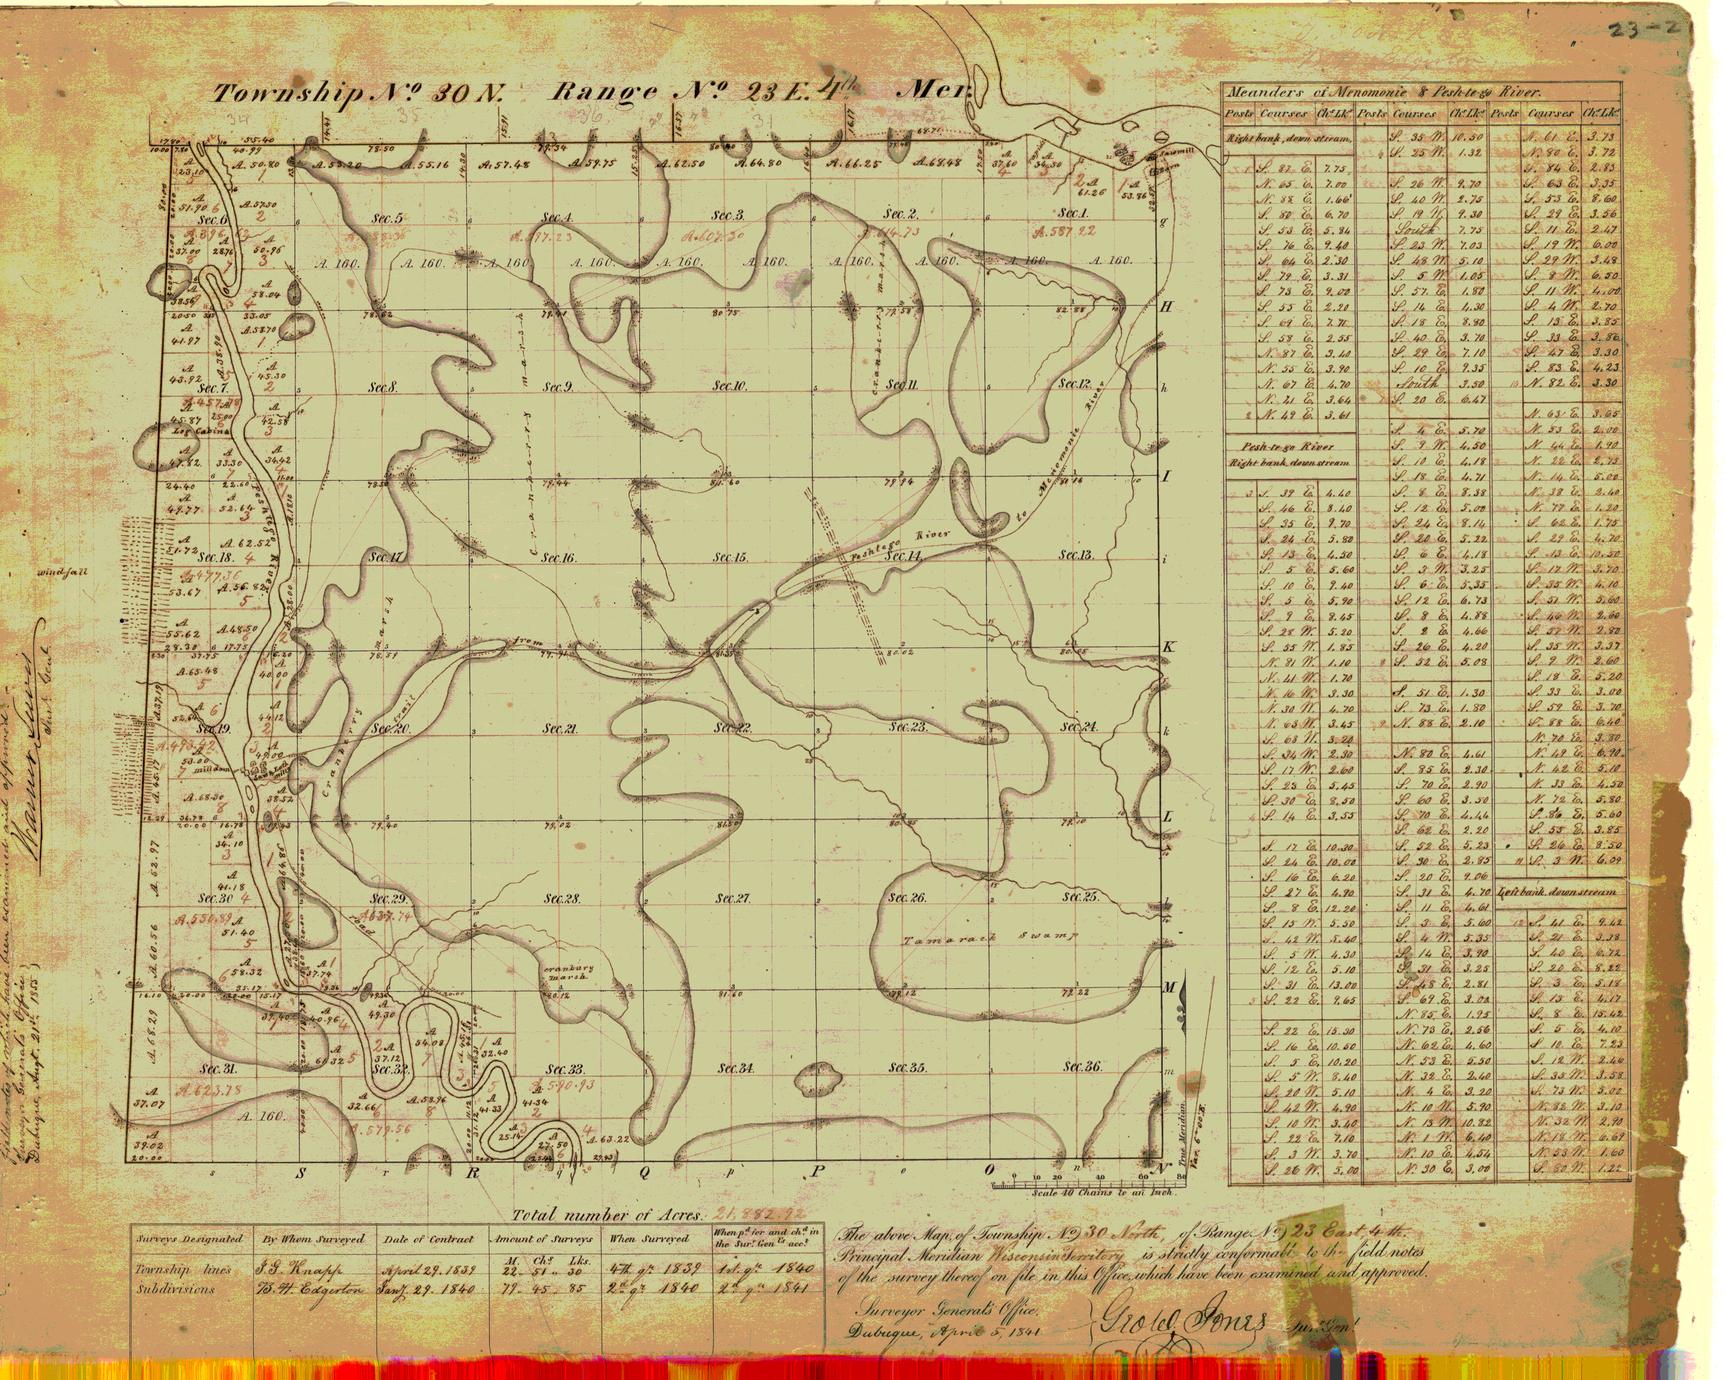 [Public Land Survey System map: Wisconsin Township 30 North, Range 23 East]